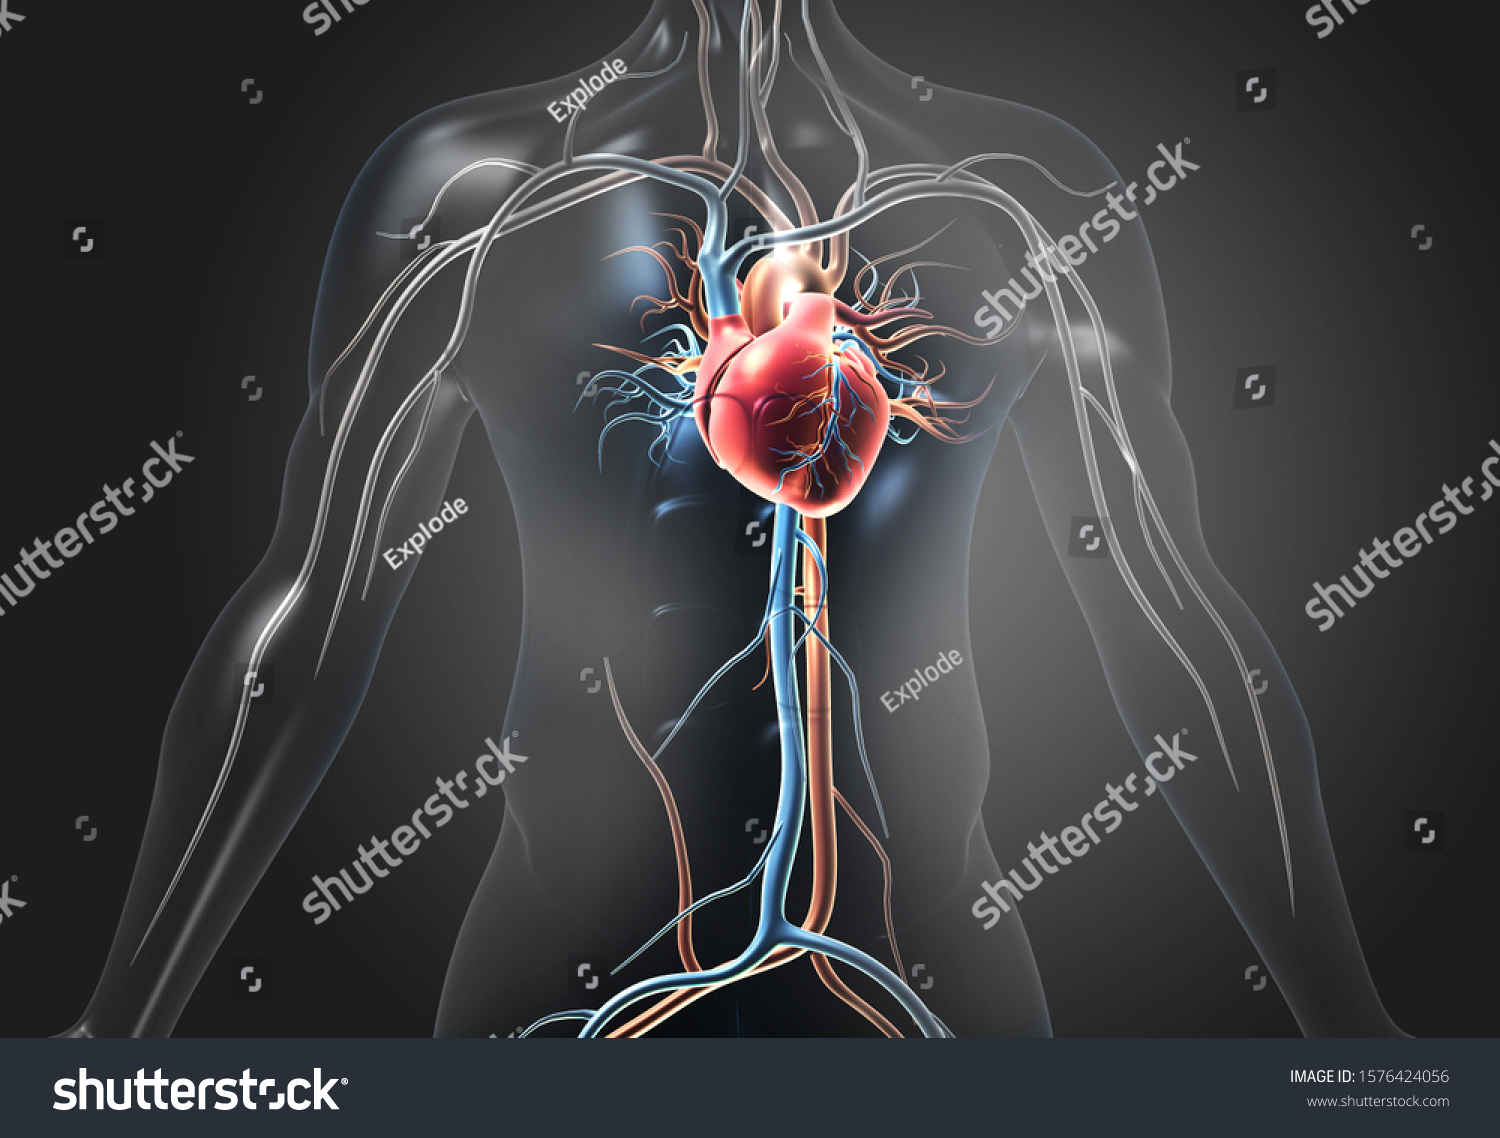 Human Heart Blood Vessels 3d Illustration Stock Illustration 1576424056 ...